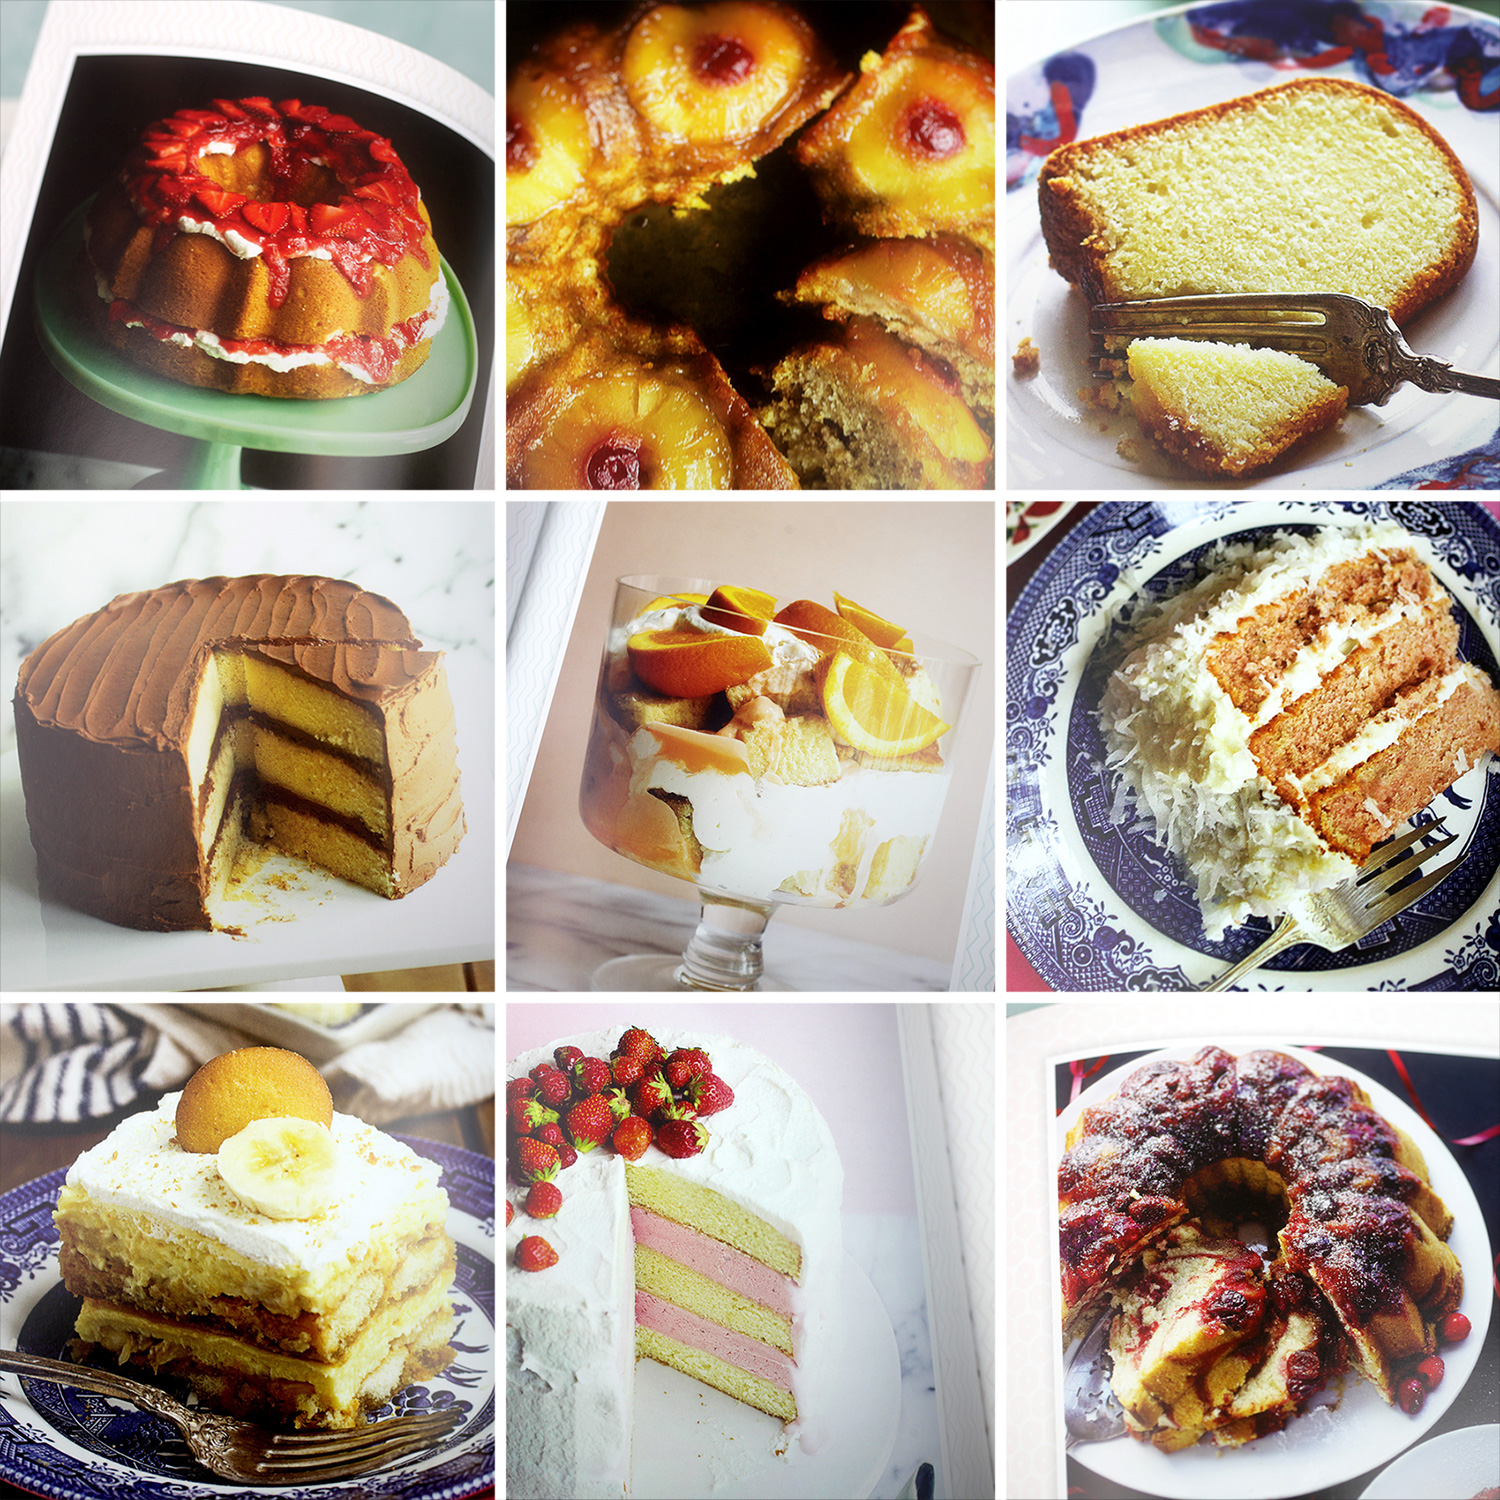 https://www.bakerella.com/site/wp-content/uploads/2020/06/12_grandbaby-cakes.jpg